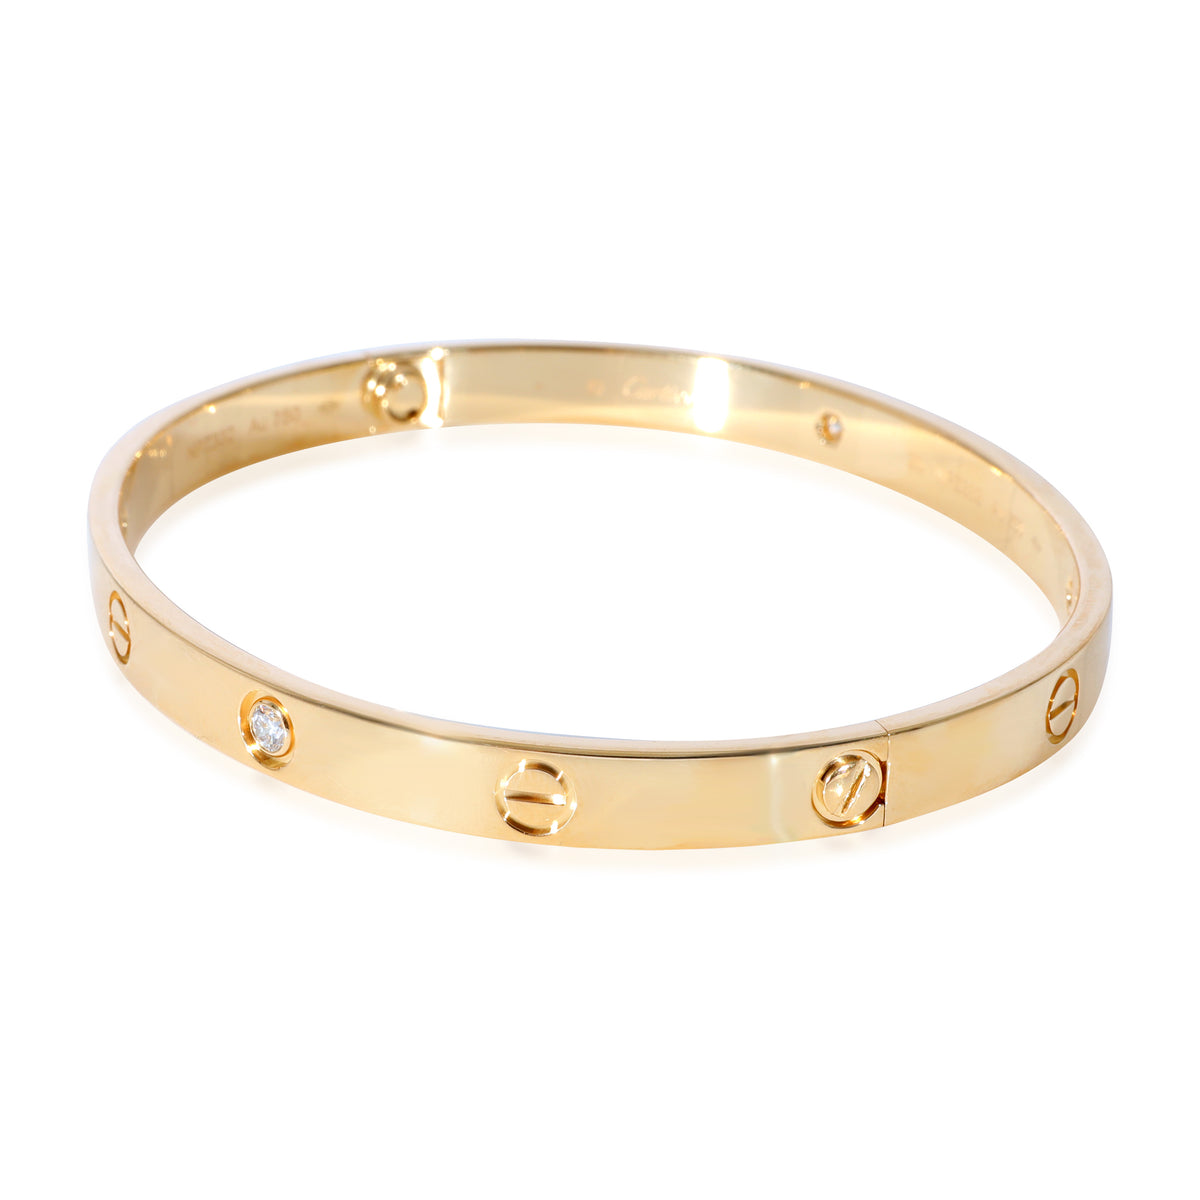 Cartier Love Diamond Bracelet in 18k Yellow Gold 0.42 CTW